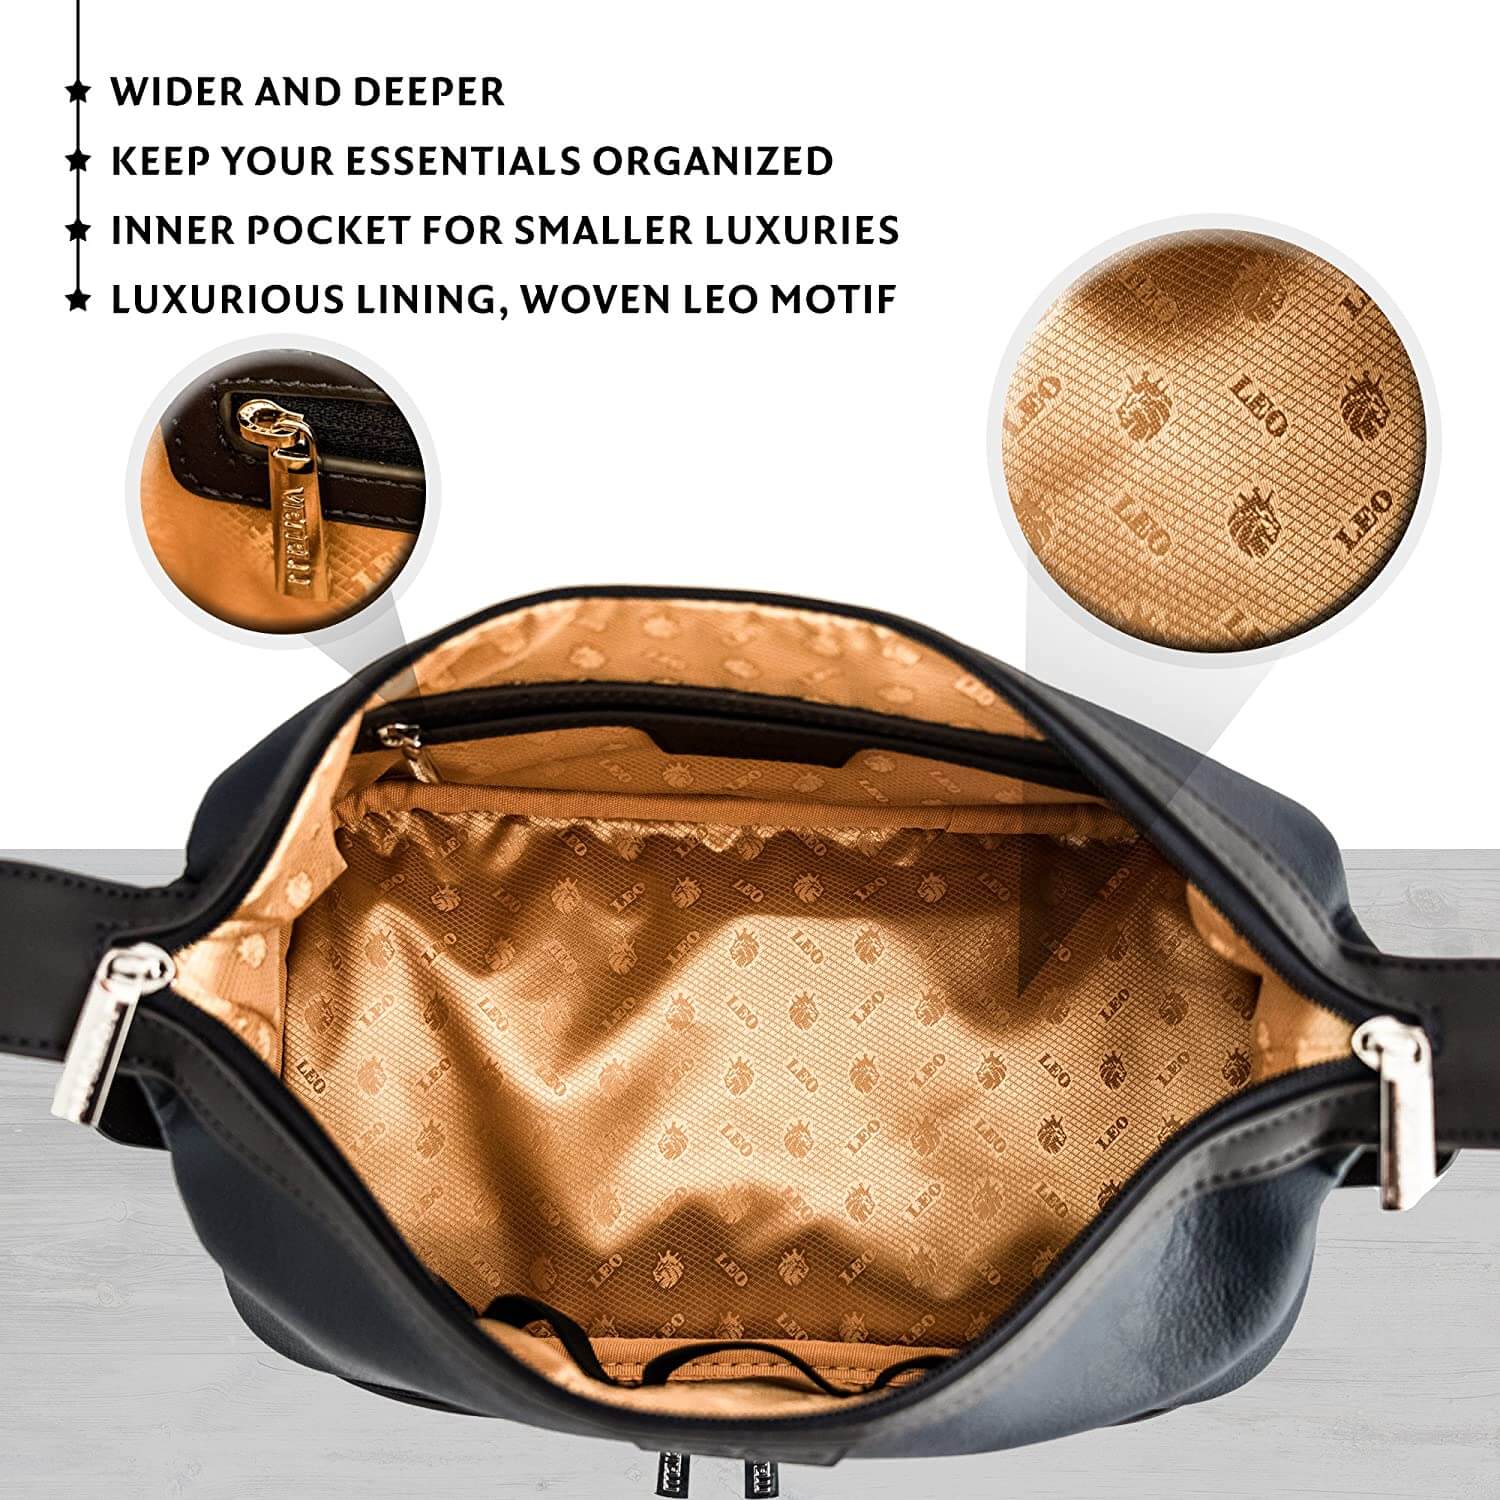 Monogram Mens Leather Toiletry Bag – NaturalLeatherShop